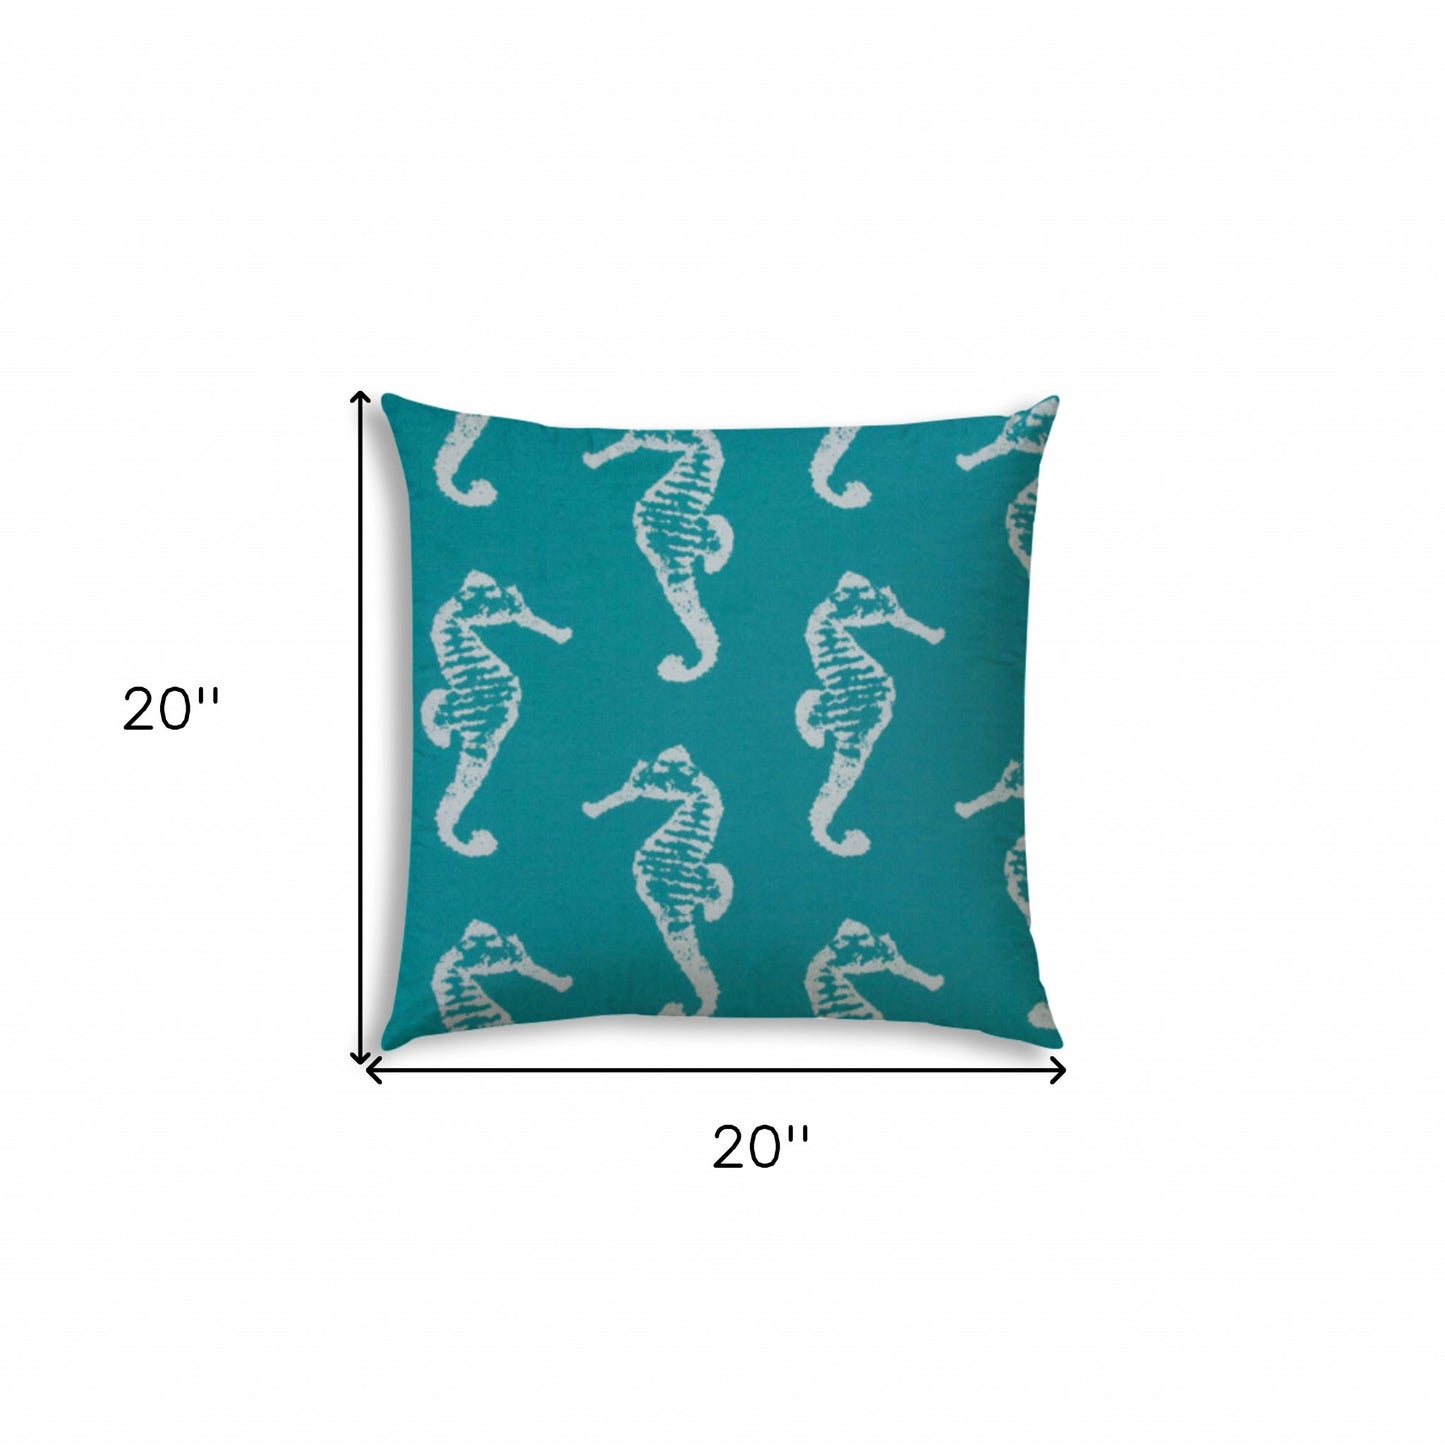 20" X 20" Turquoise And White Seahorse Blown Seam Coastal Throw Indoor Outdoor Pillow